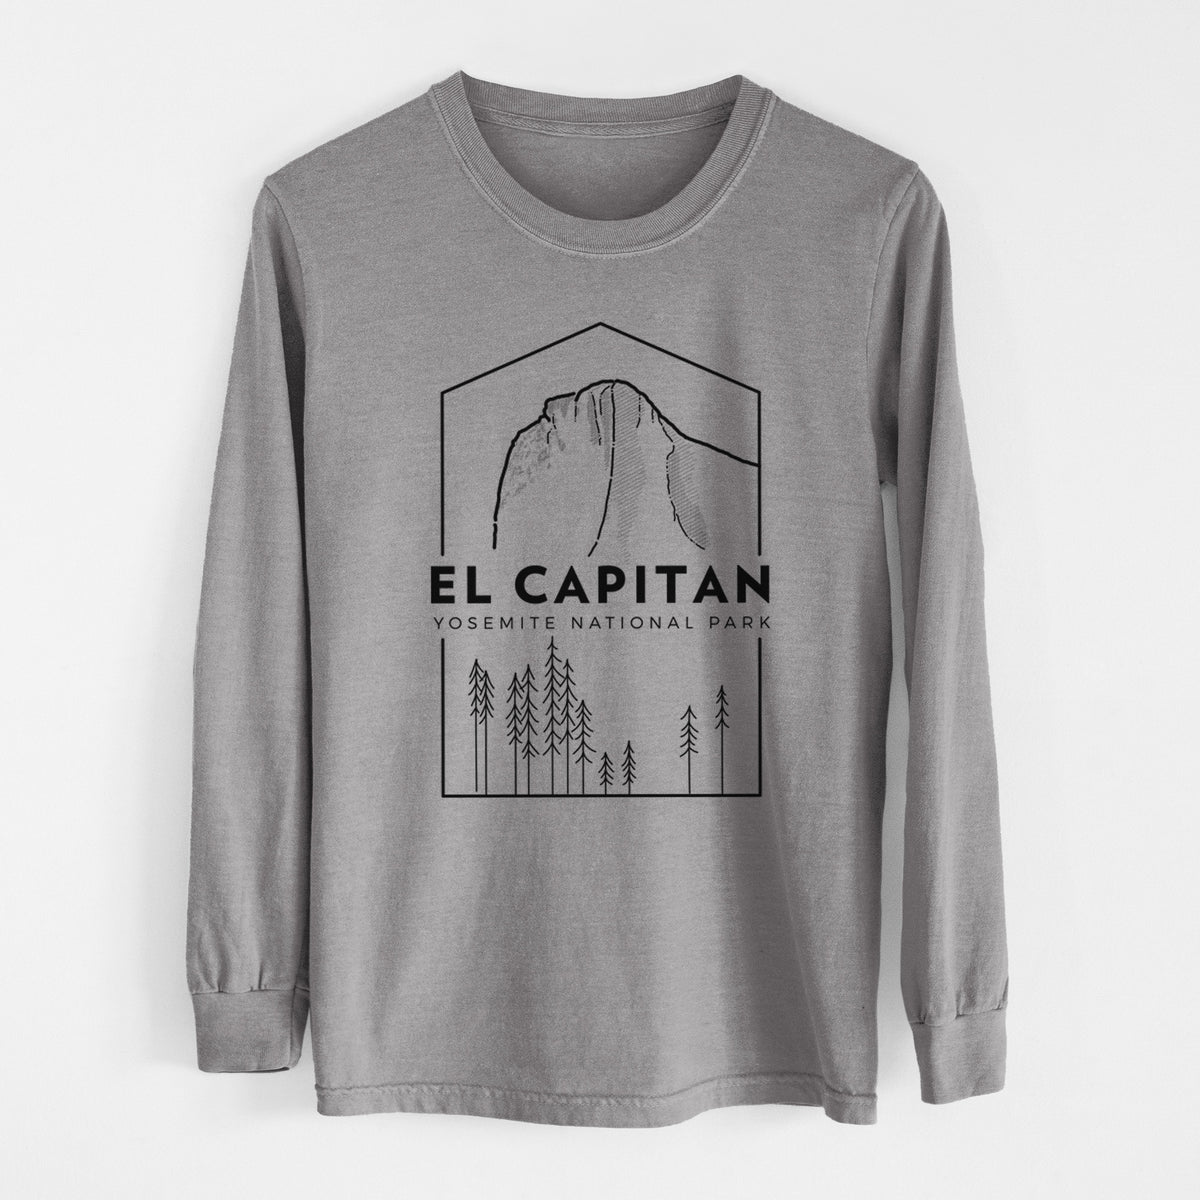 El Capitan - Yosemite National Park - Heavyweight 100% Cotton Long Sleeve